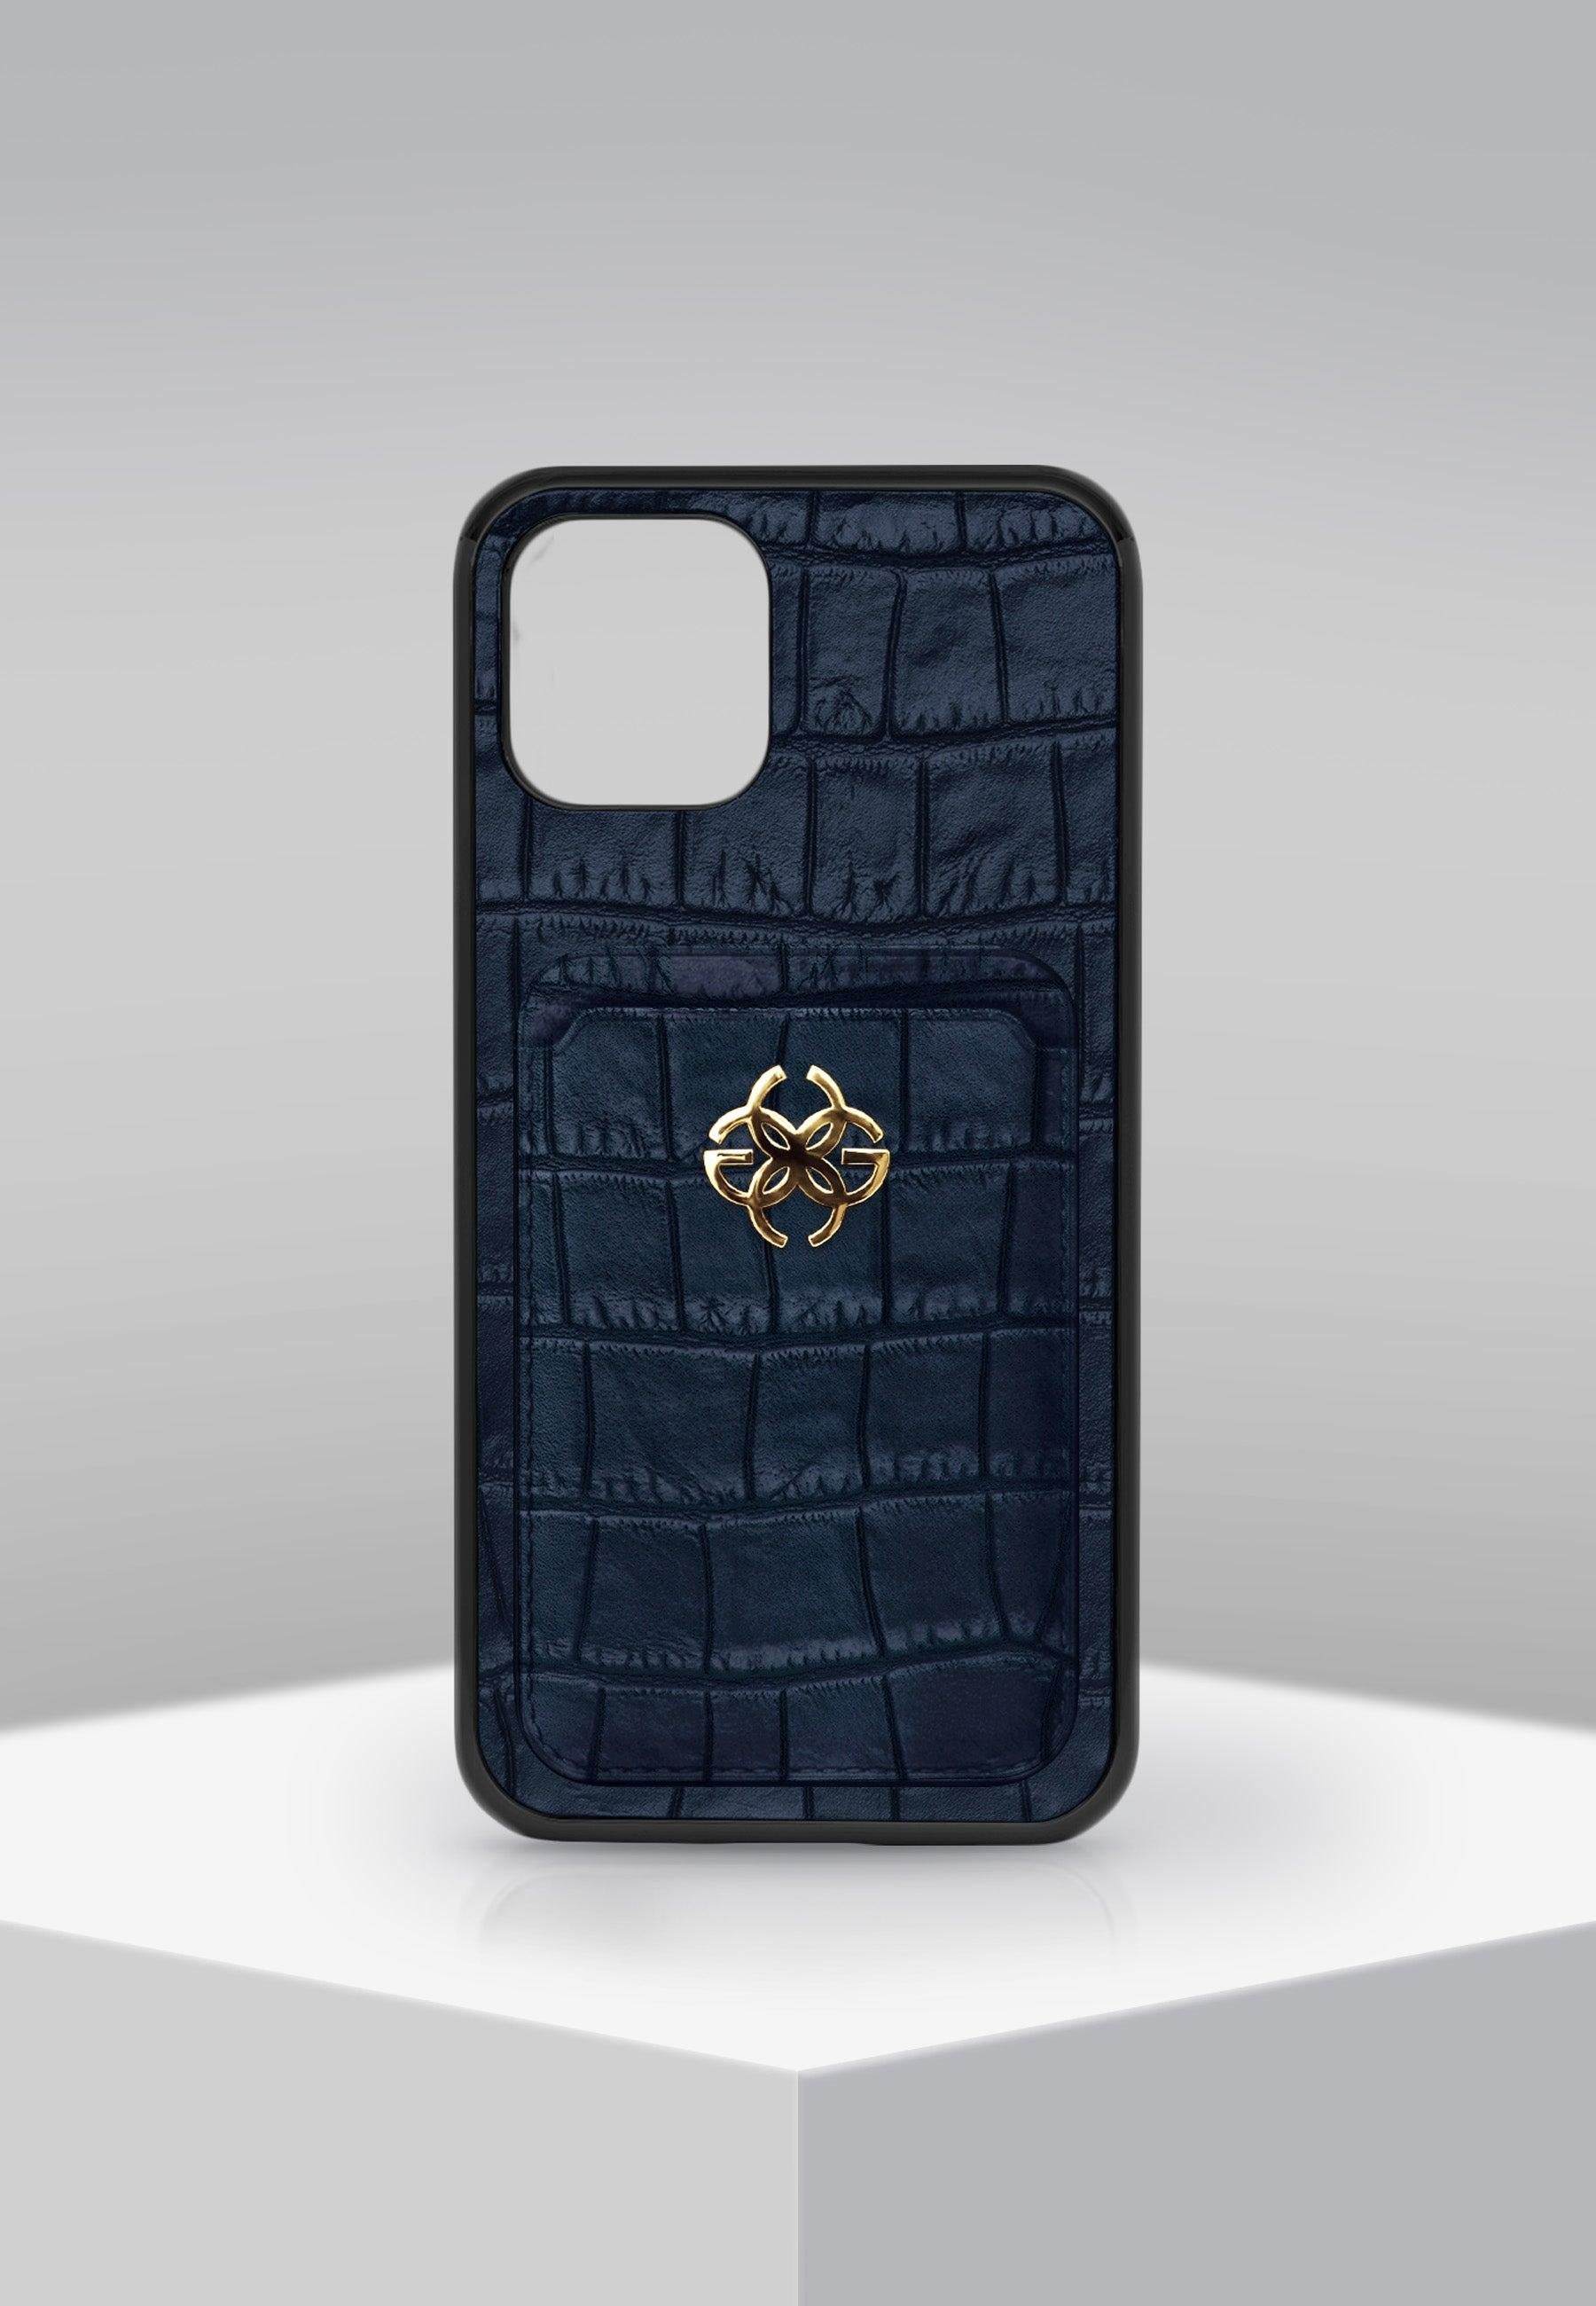 Buy Golden Concept Iphone 12 Pro Max Blue + Gold Wallet Edition Case Online